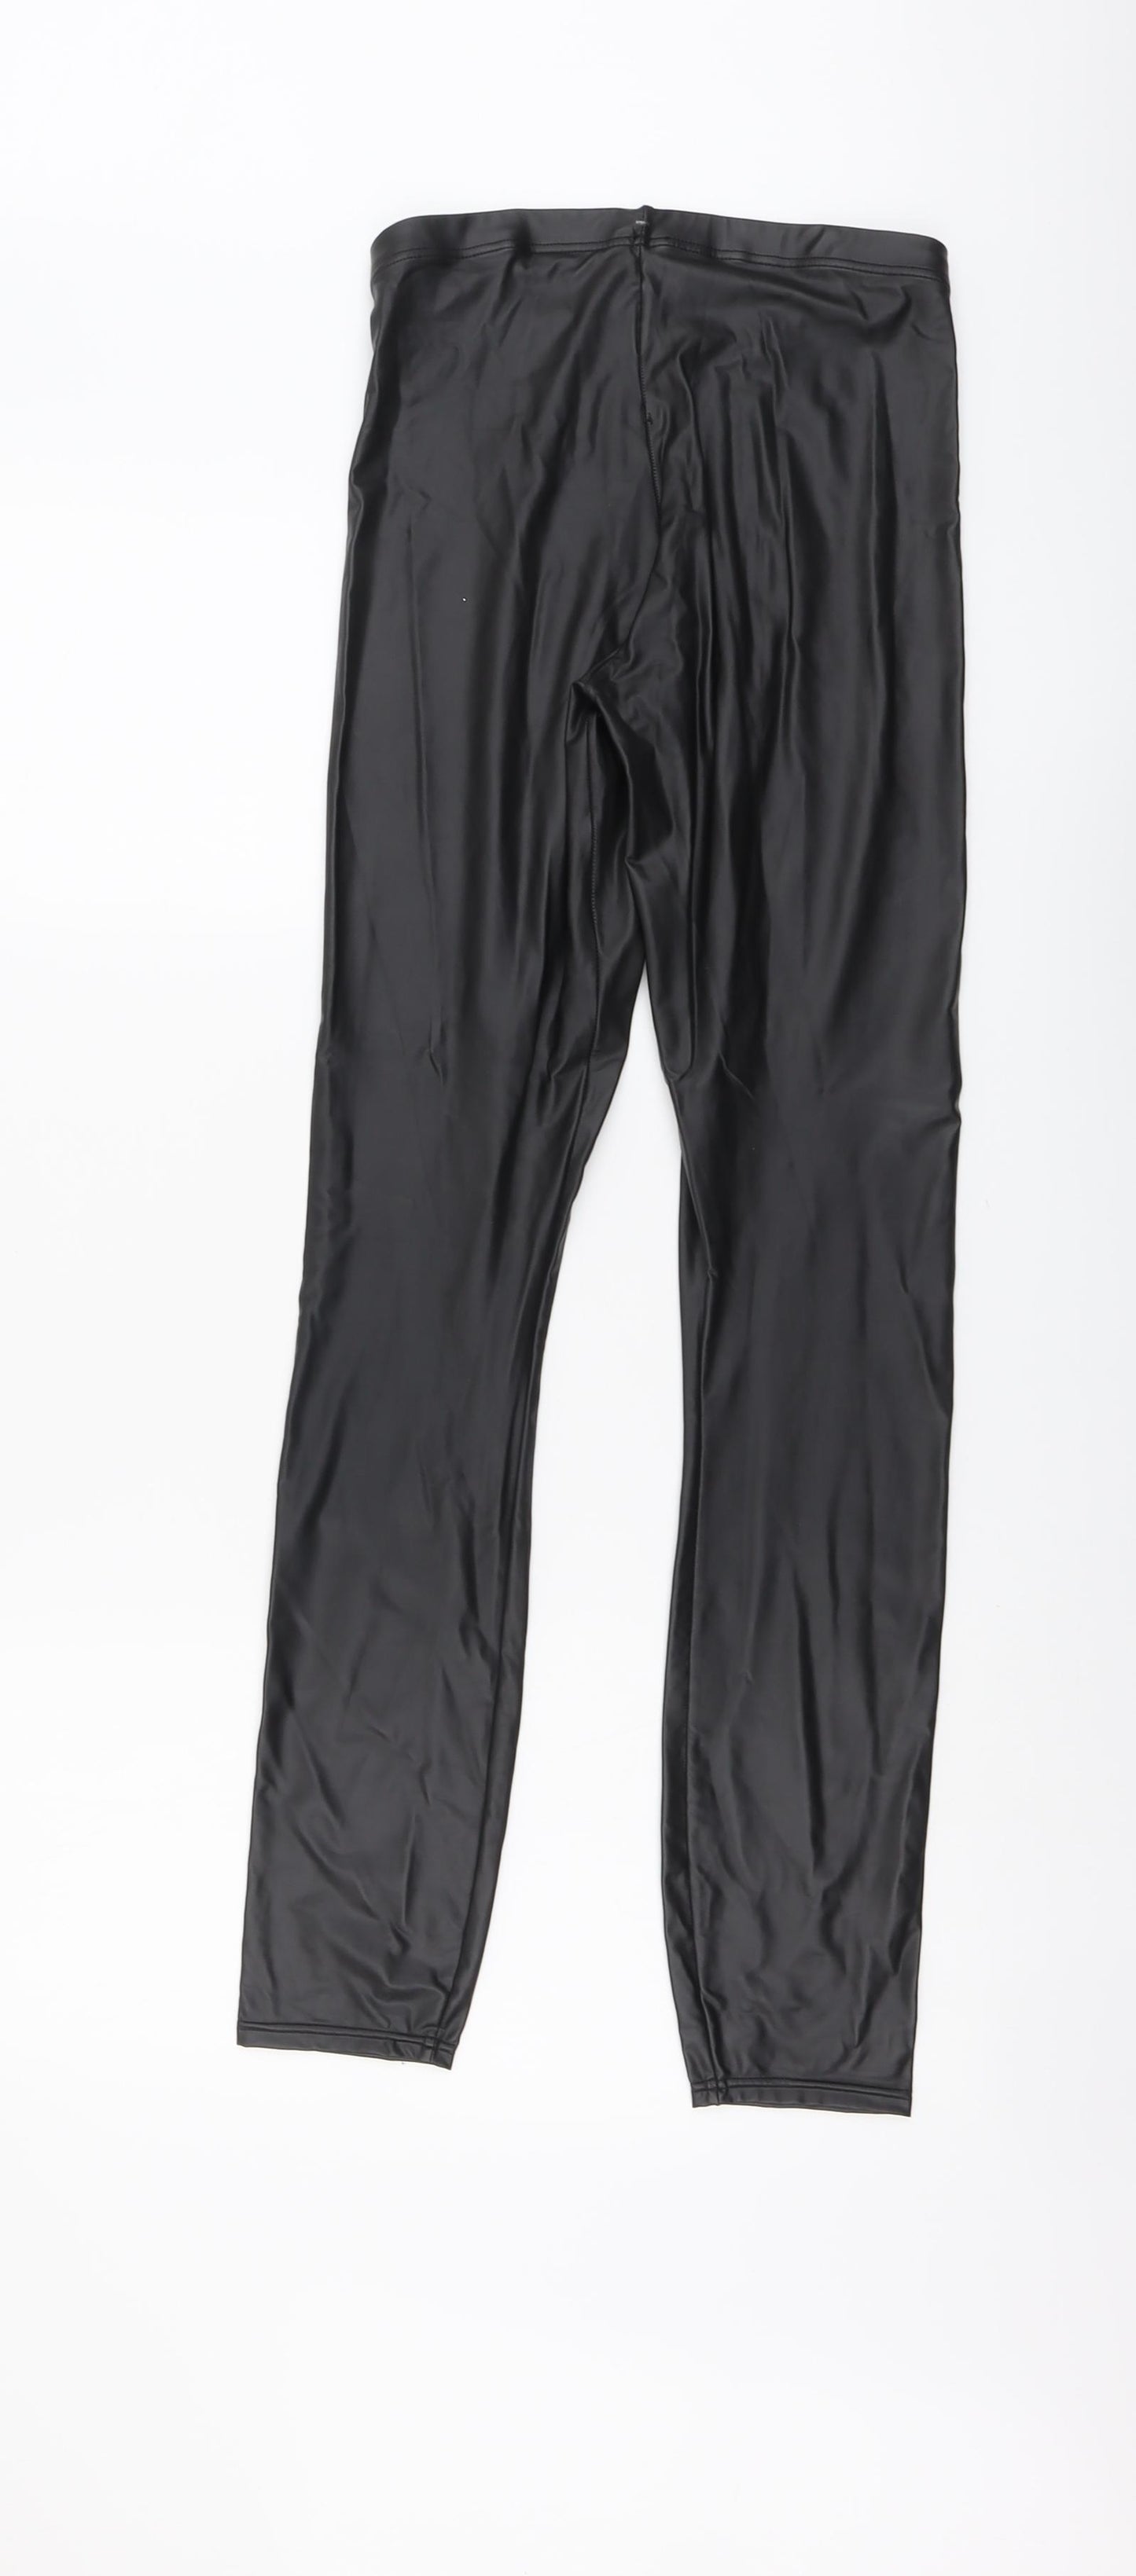 H&M Womens Black Polyester Capri Leggings Size S L29 in